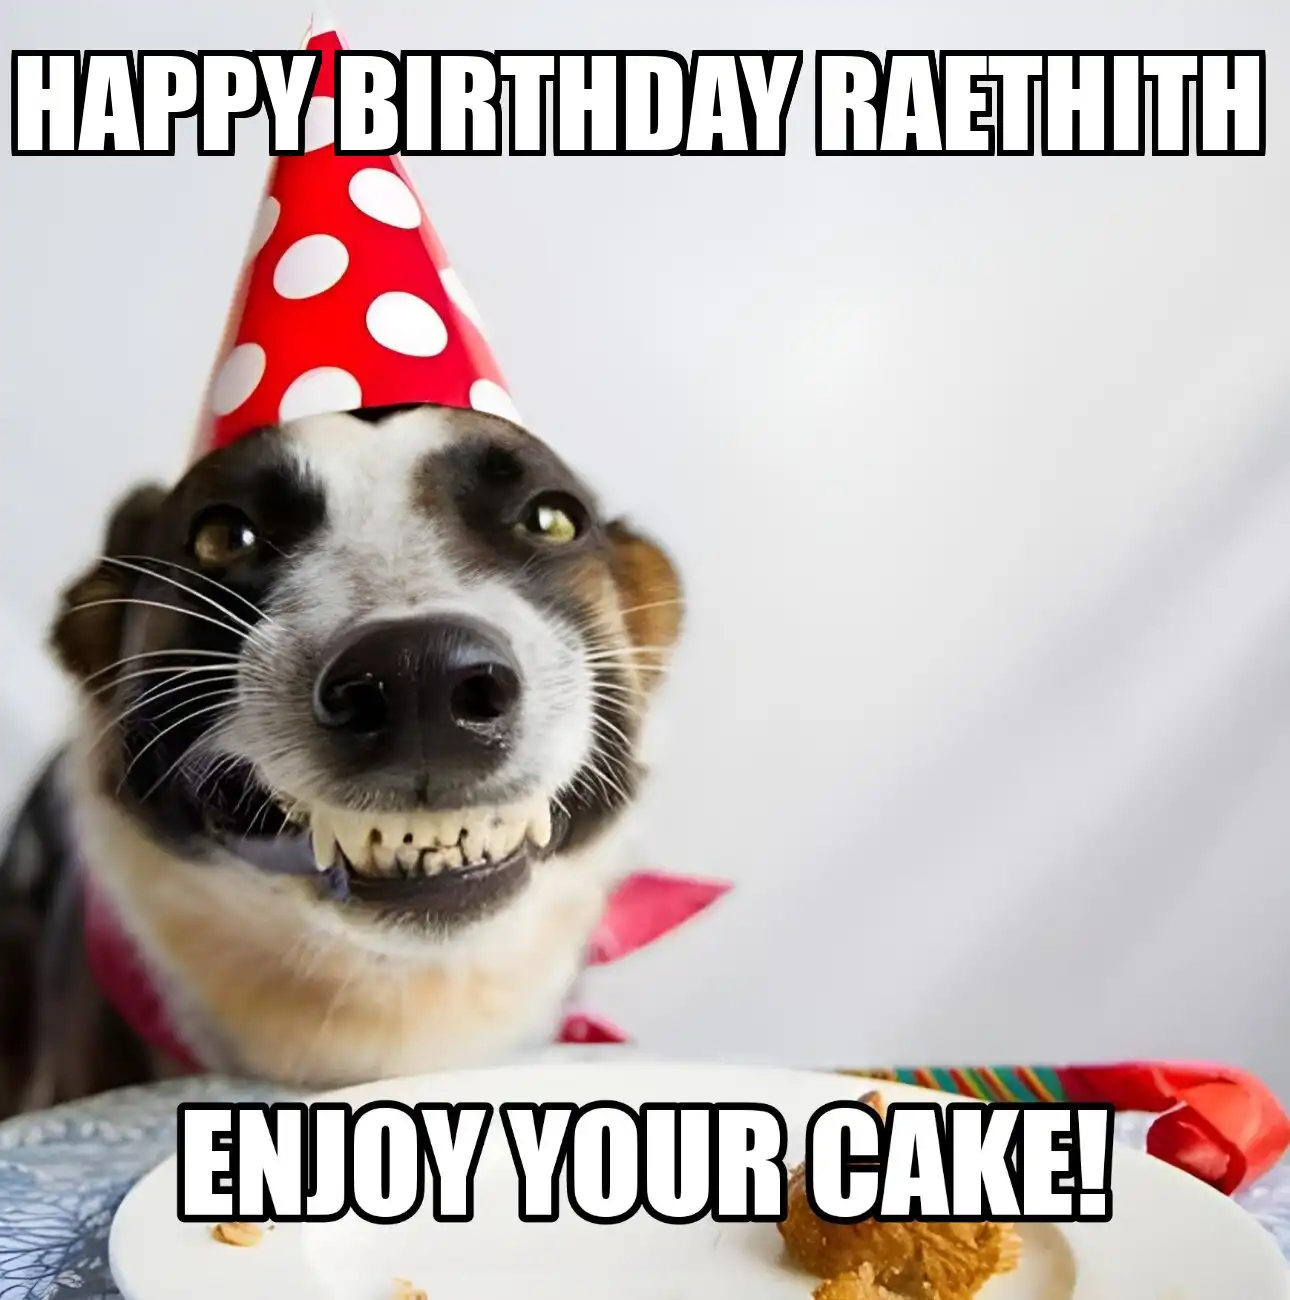 Happy Birthday Raethith Enjoy Your Cake Dog Meme